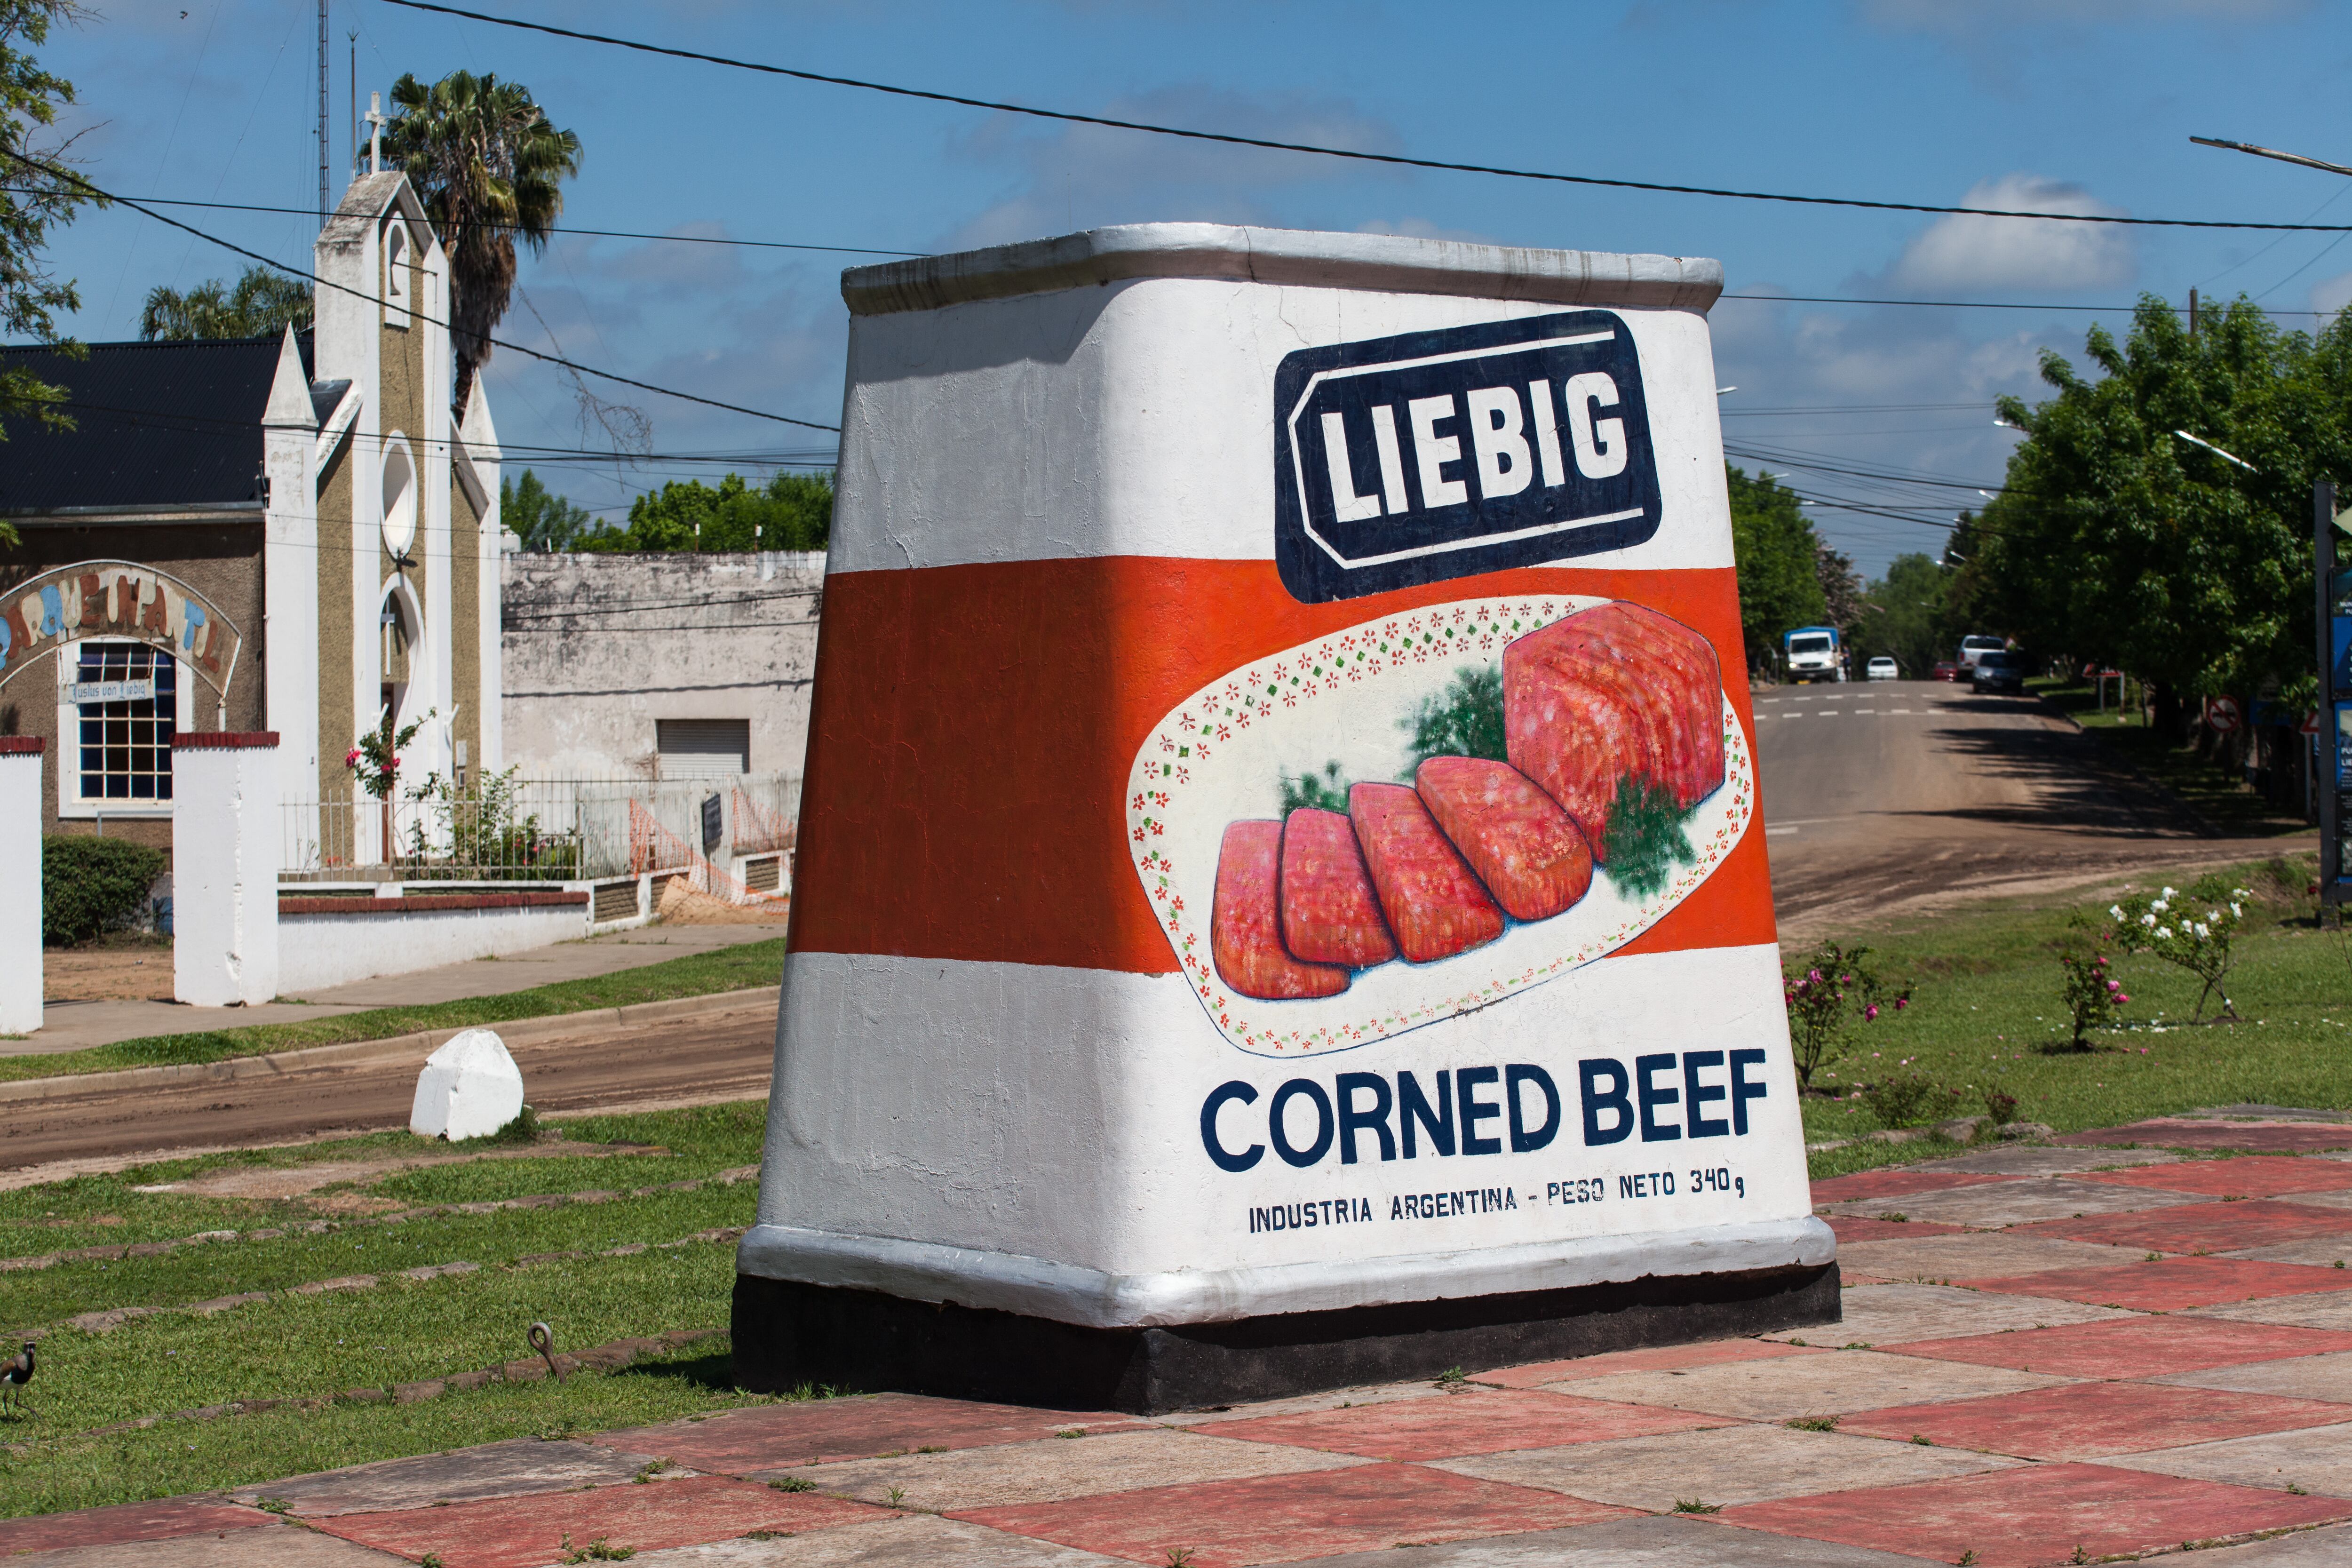 La icónica lata de Liebig, corned beef.